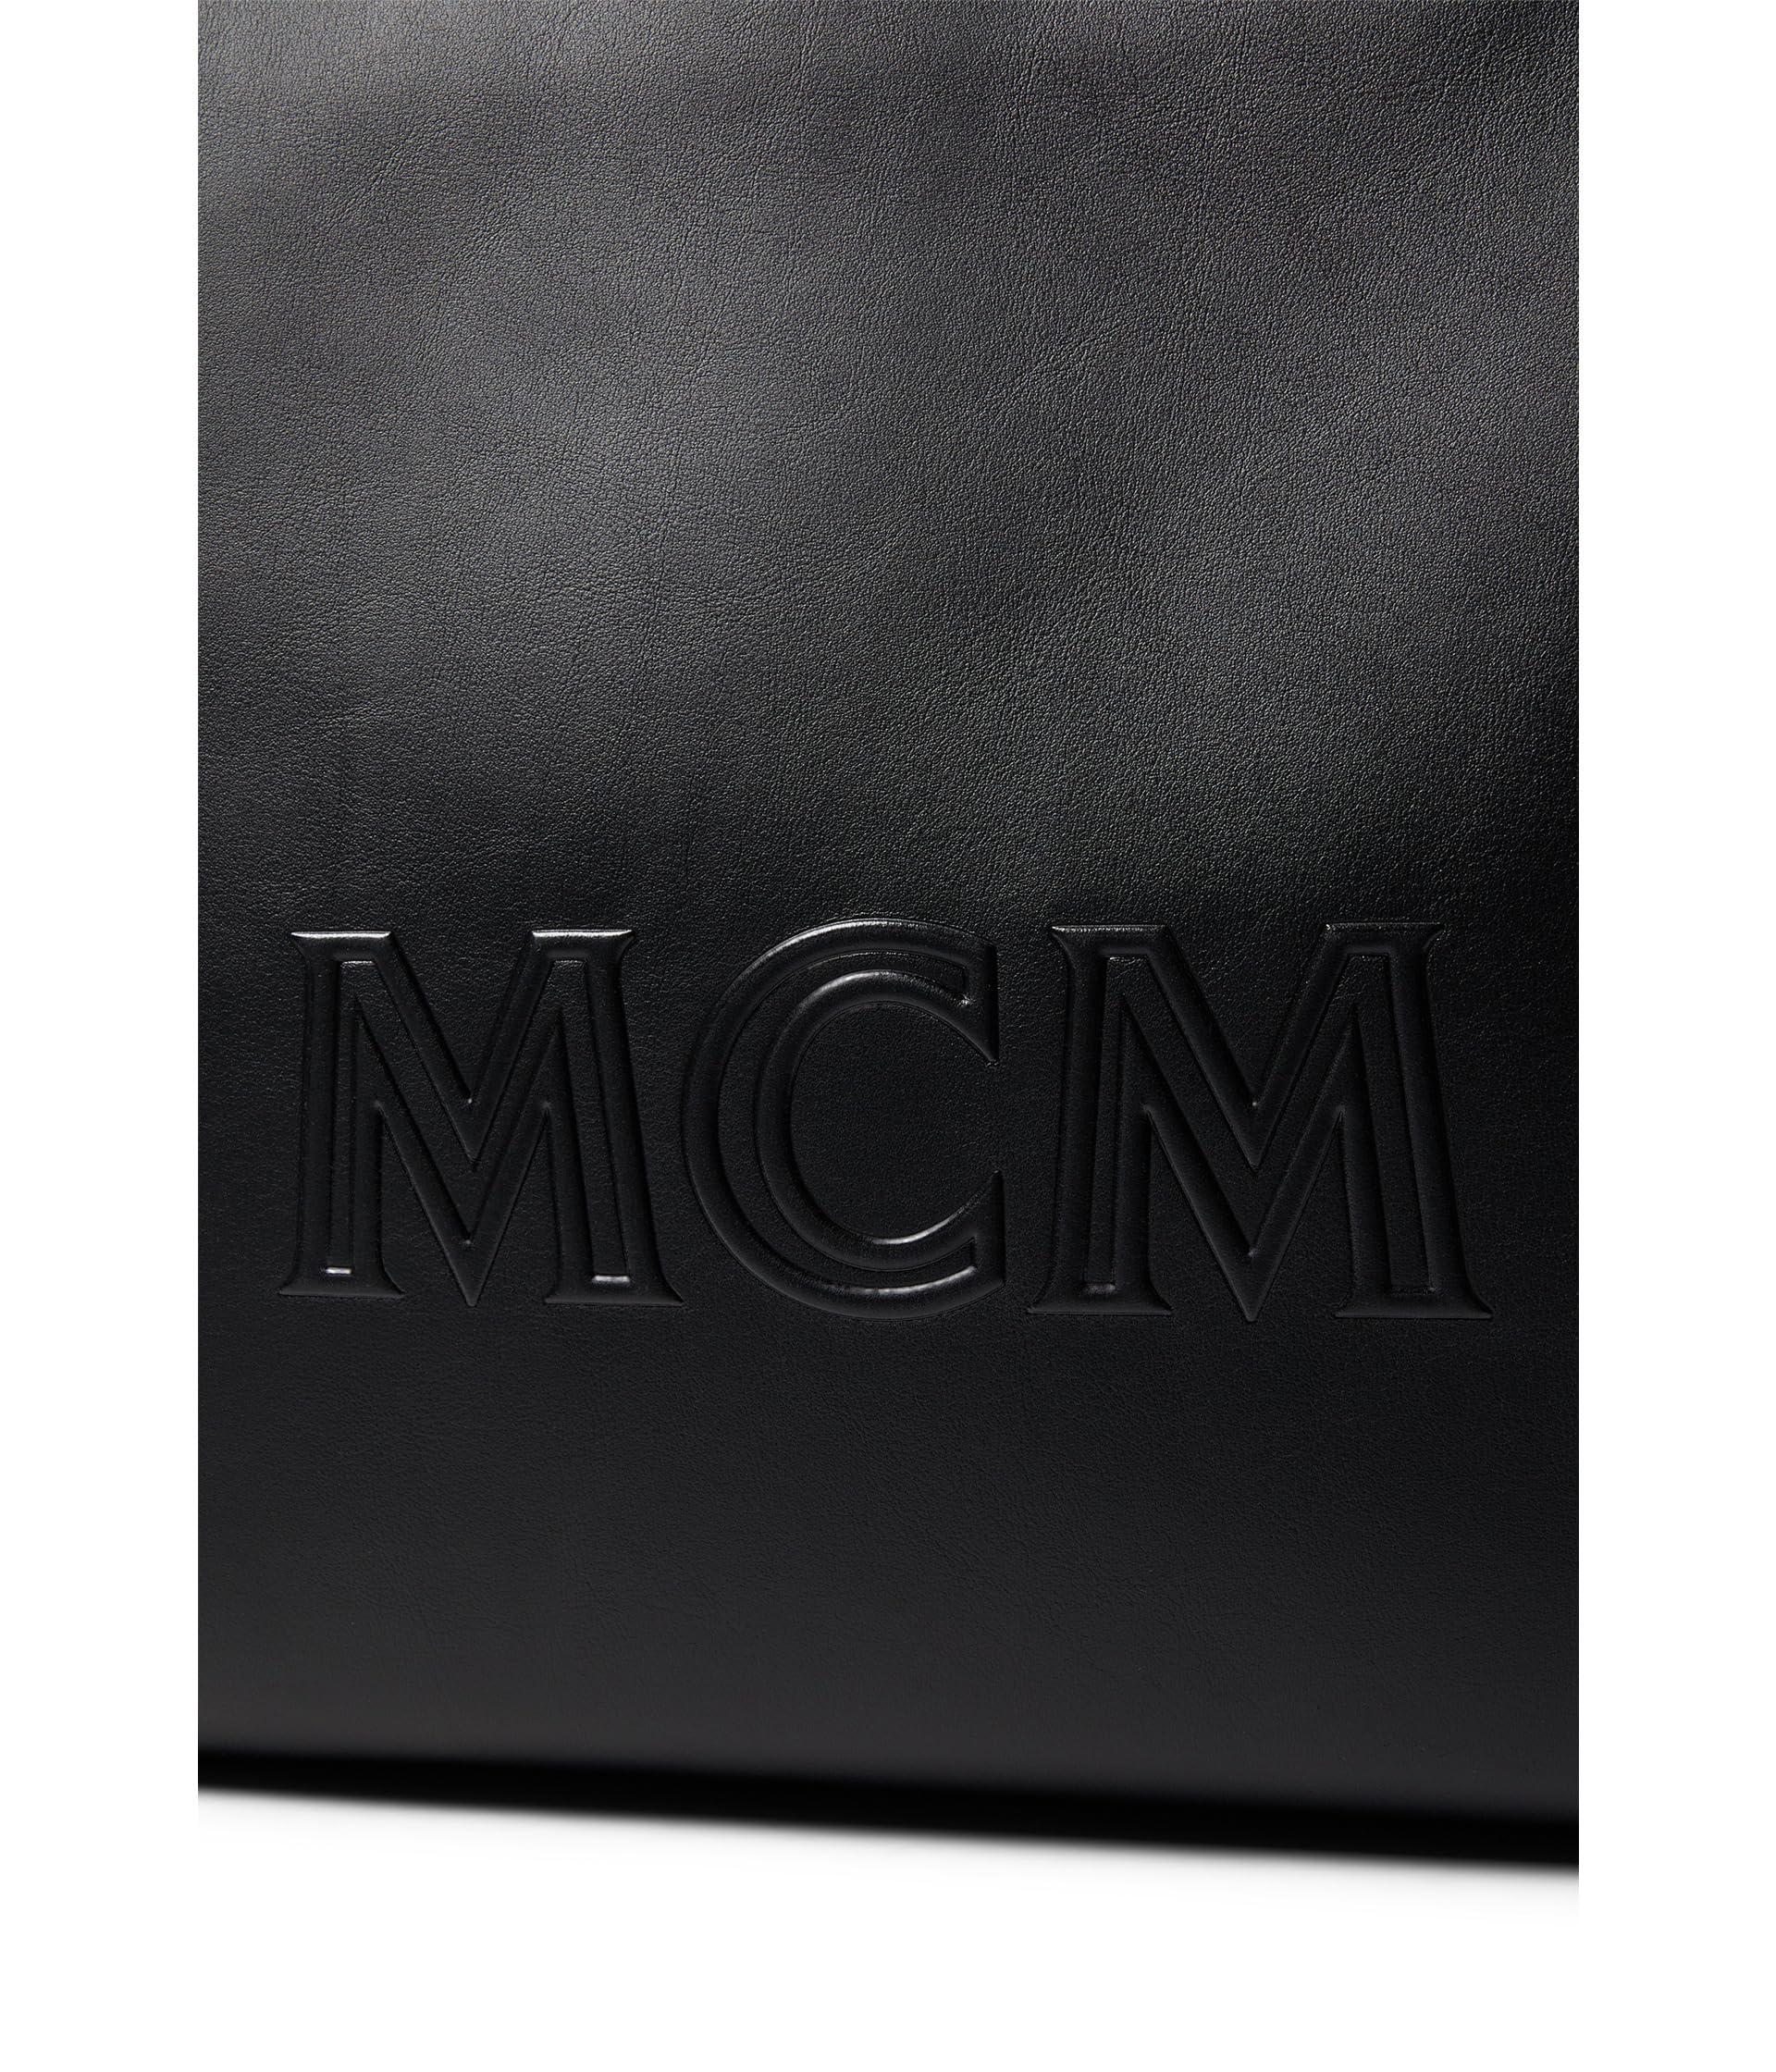 Mcm Medium Klassik Leather Tote in Black